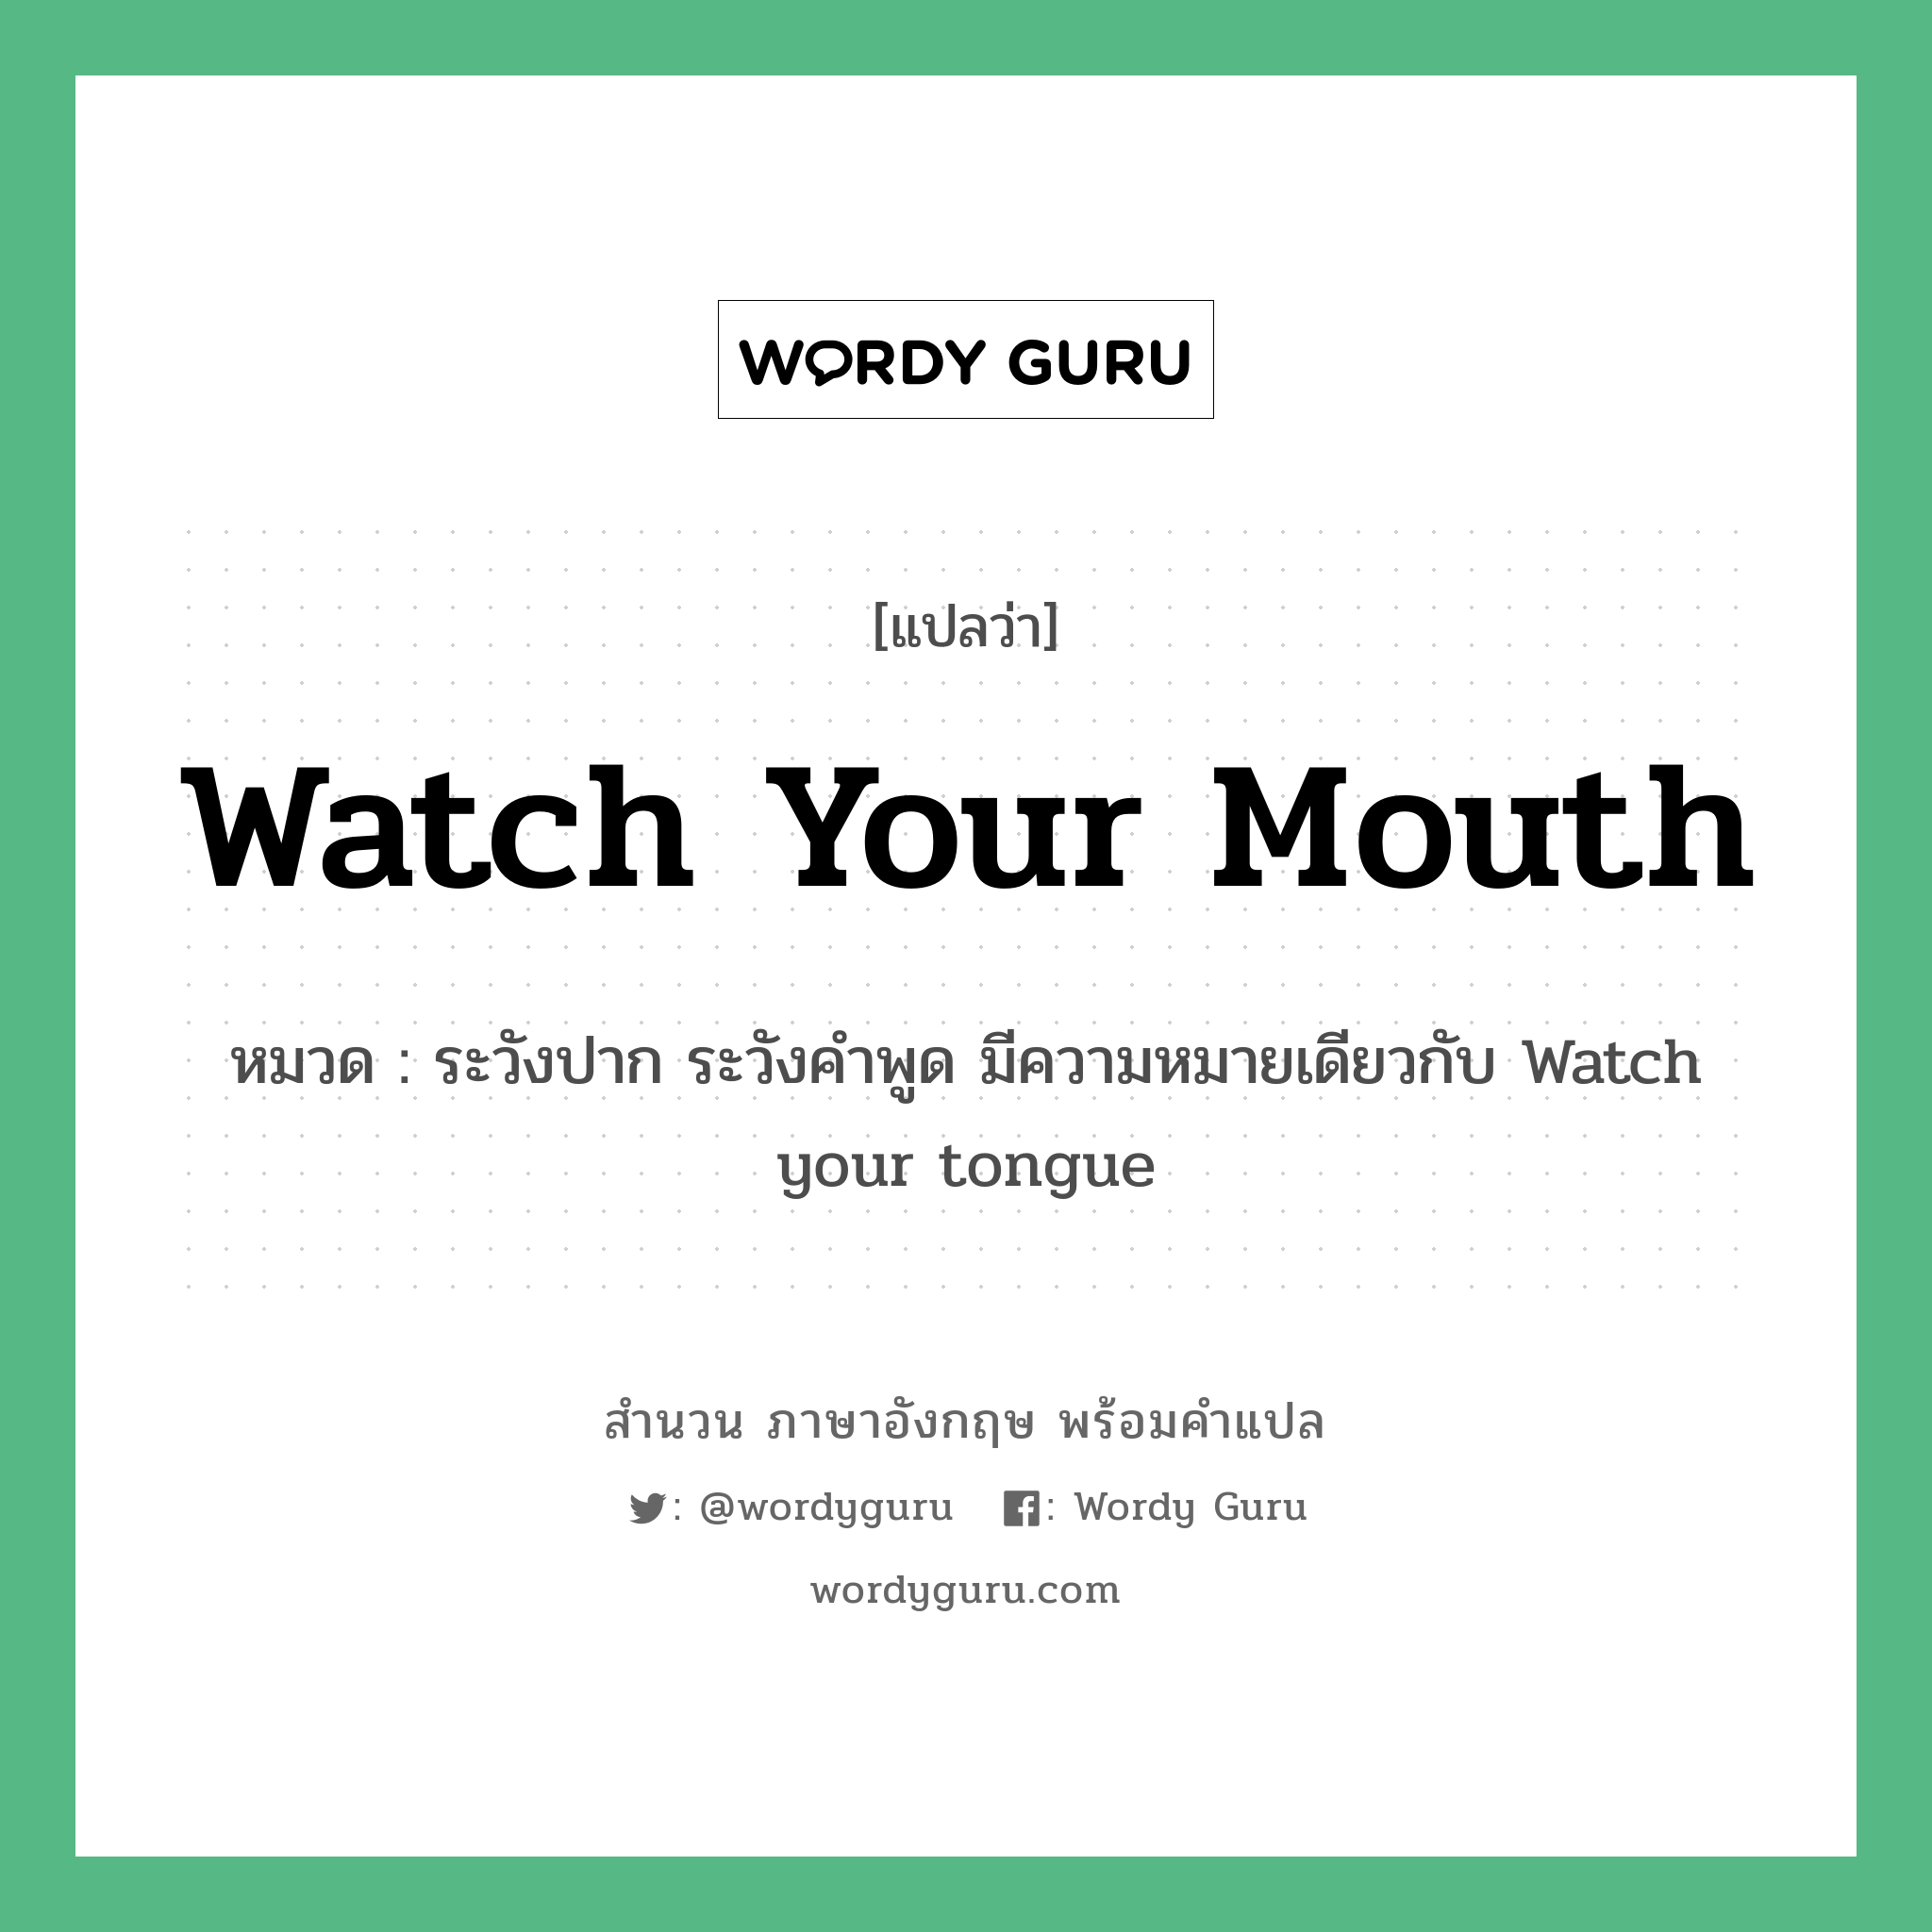 Watch your mouth แปลว่า?, สำนวนภาษาอังกฤษ Watch your mouth หมวด ระวังปาก ระวังคำพูด มีความหมายเดียวกับ Watch your tongue